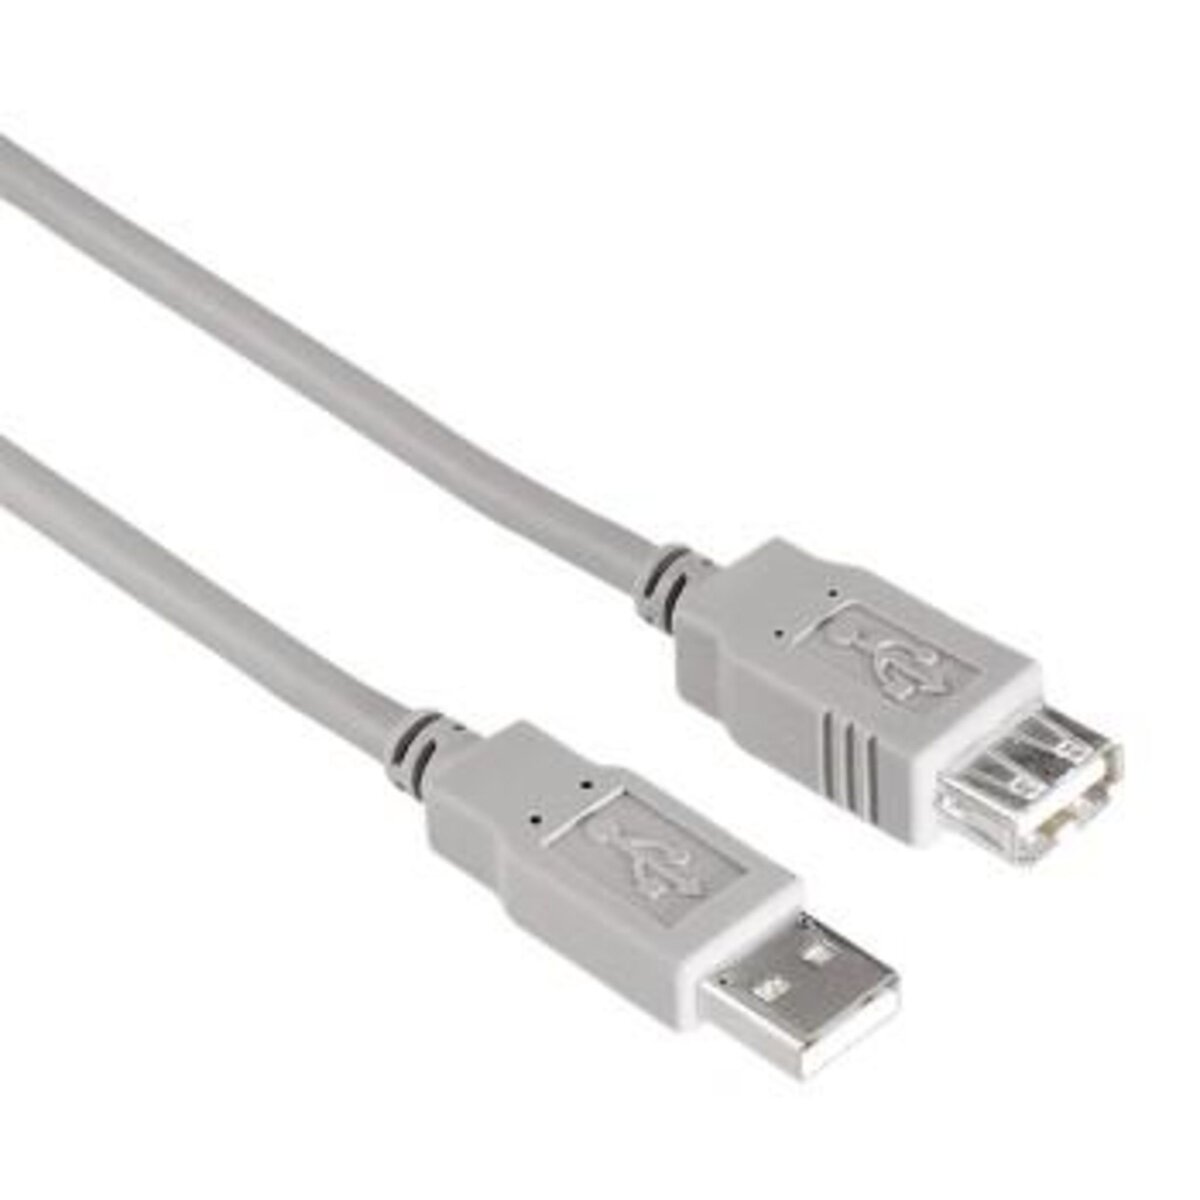 QILIVE Rallonge USB 2.0 A/A 3M pas cher 